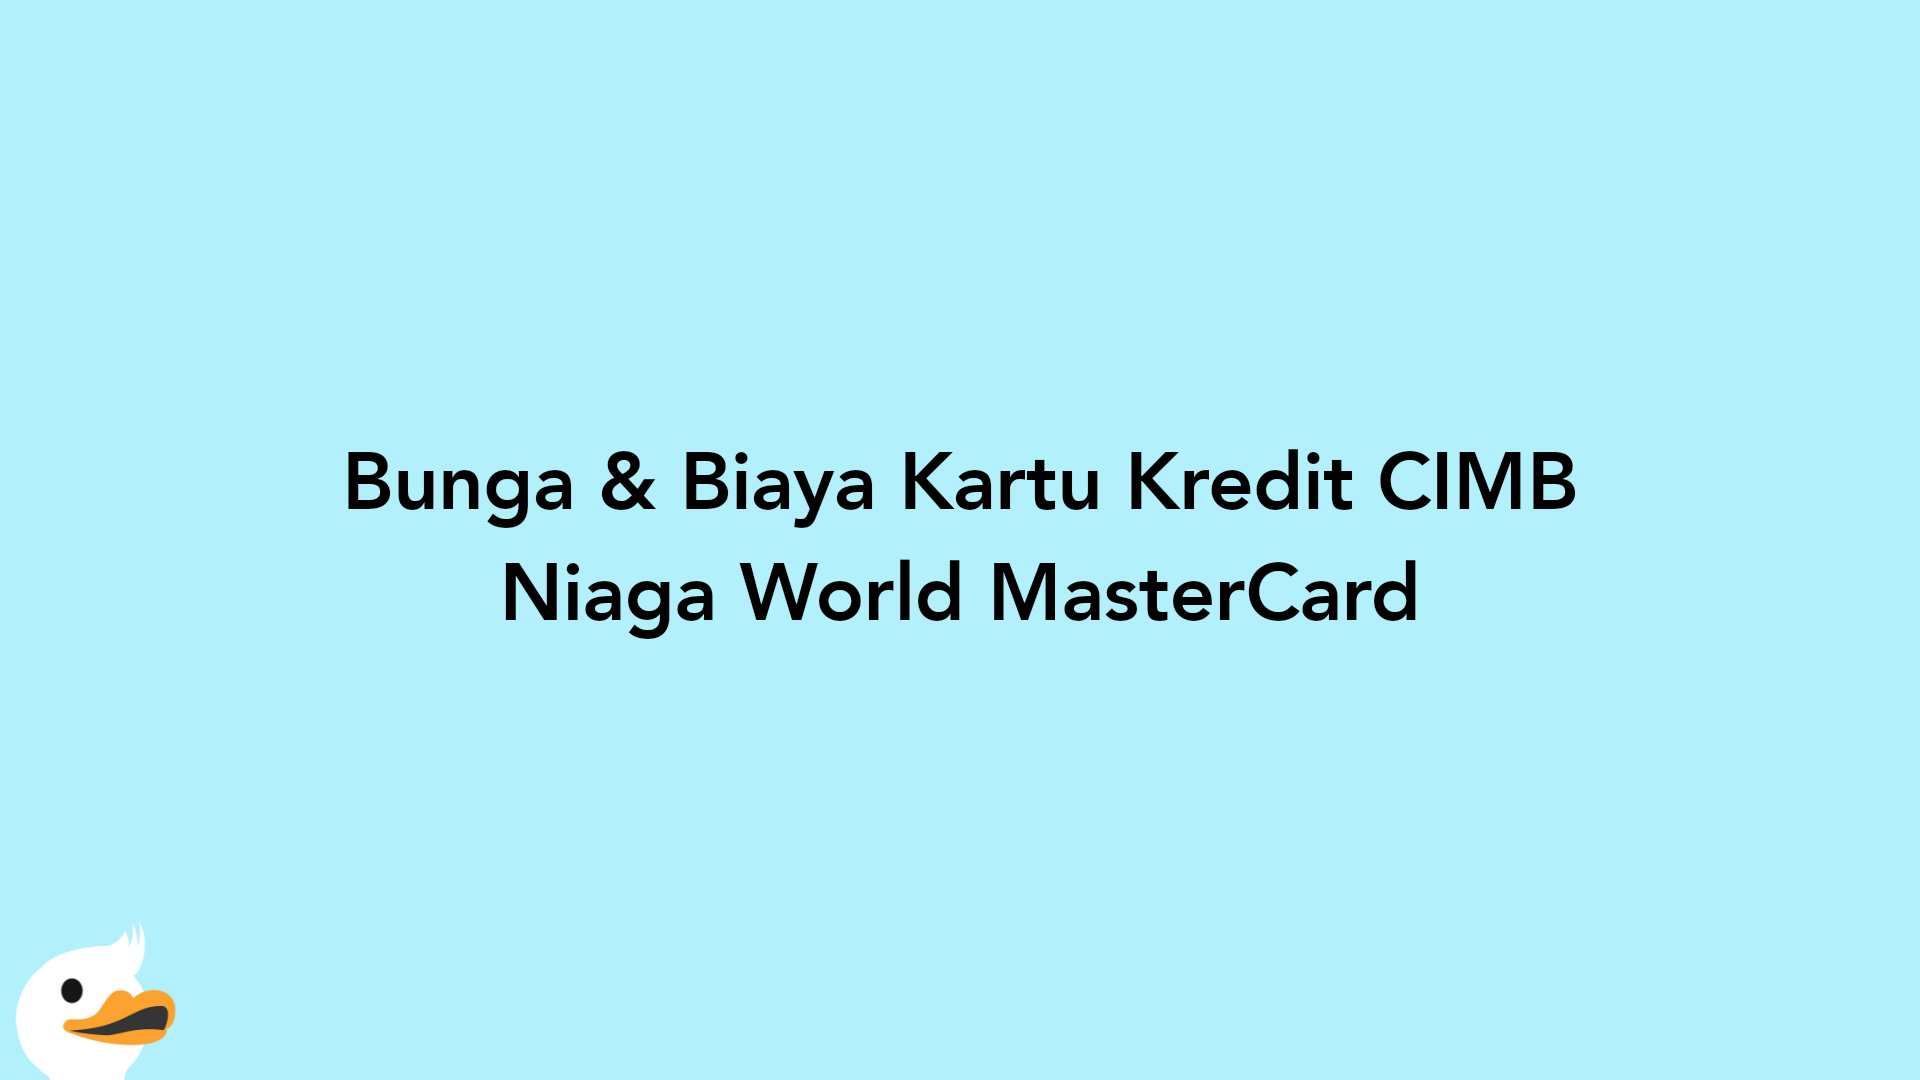 Bunga & Biaya Kartu Kredit CIMB Niaga World MasterCard